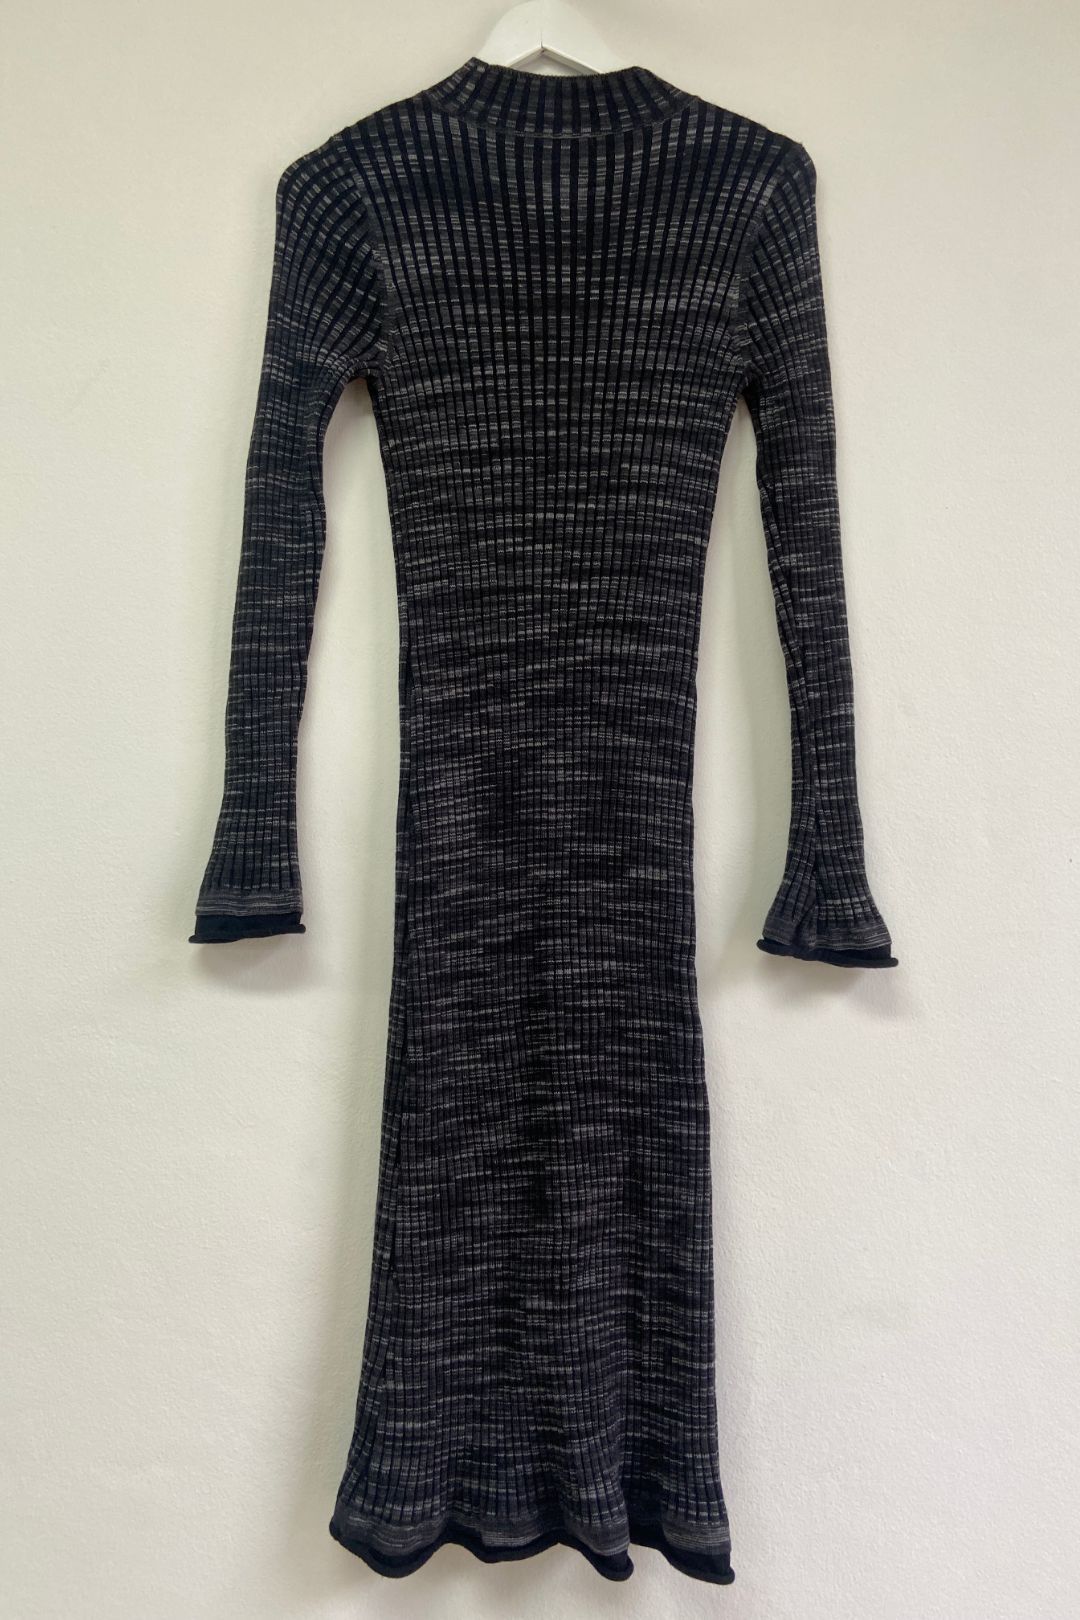 Long Black Knitted Dress / Long Sleeve Dress / Pencil Dress / Bodycon Dress  / Turtle Neck Dress / Polo Dress / Floor Length Dress - Etsy